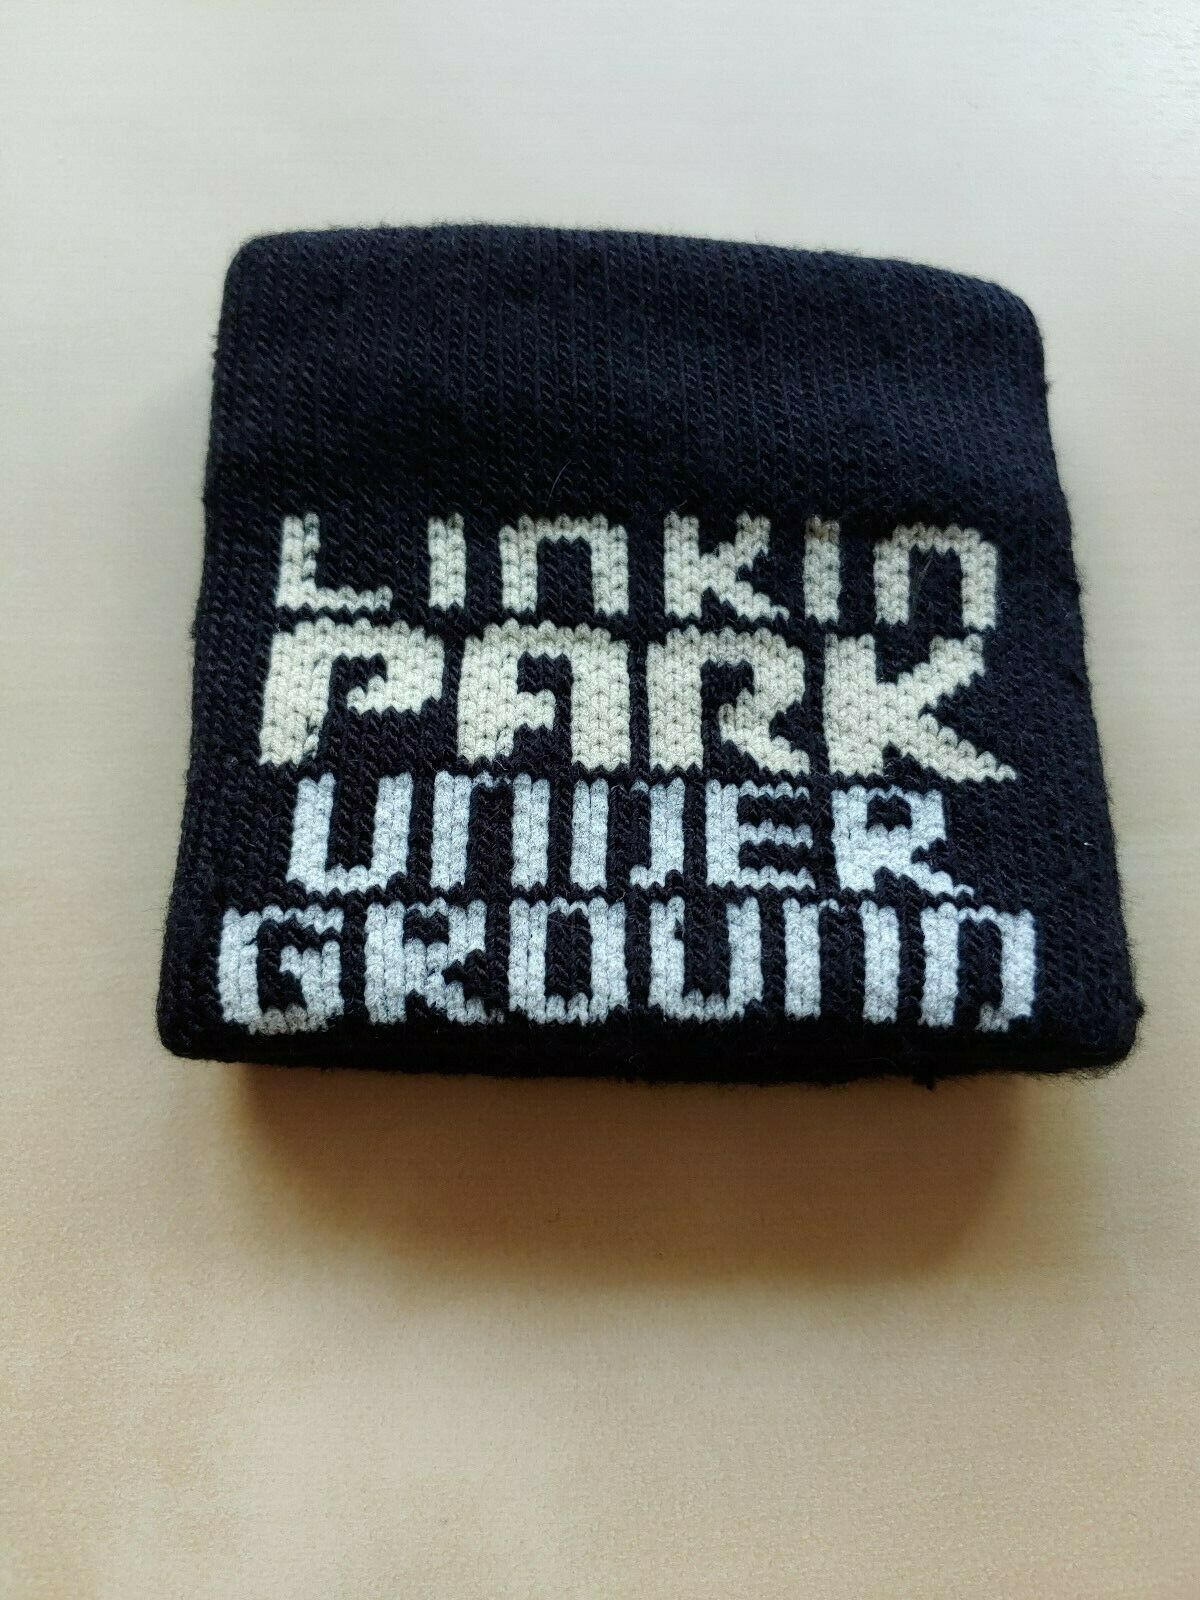 Lpu Linkin Park Underground Knit Wristband Sweatband Black